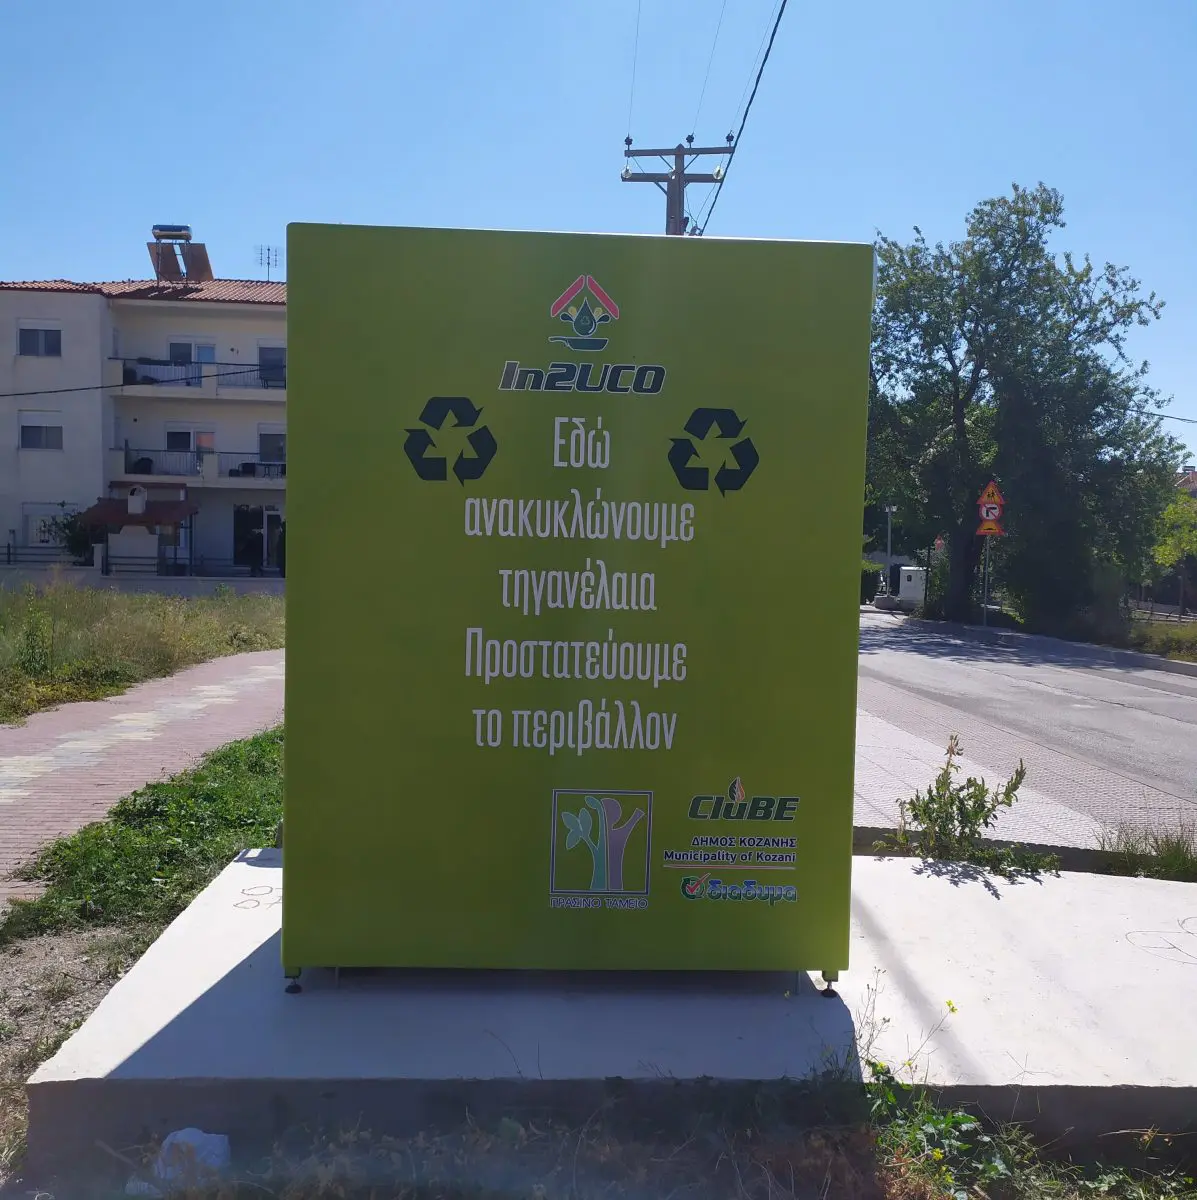 Eordaialive.com - Τα Νέα της Πτολεμαΐδας, Εορδαίας, Κοζάνης Δήμος Κοζάνης: Ανοιχτή εκδήλωση ενημέρωσης πολιτών για την Ανακύκλωση τηγανελαίων στο ειδικό πράσινο ΑΤΜ